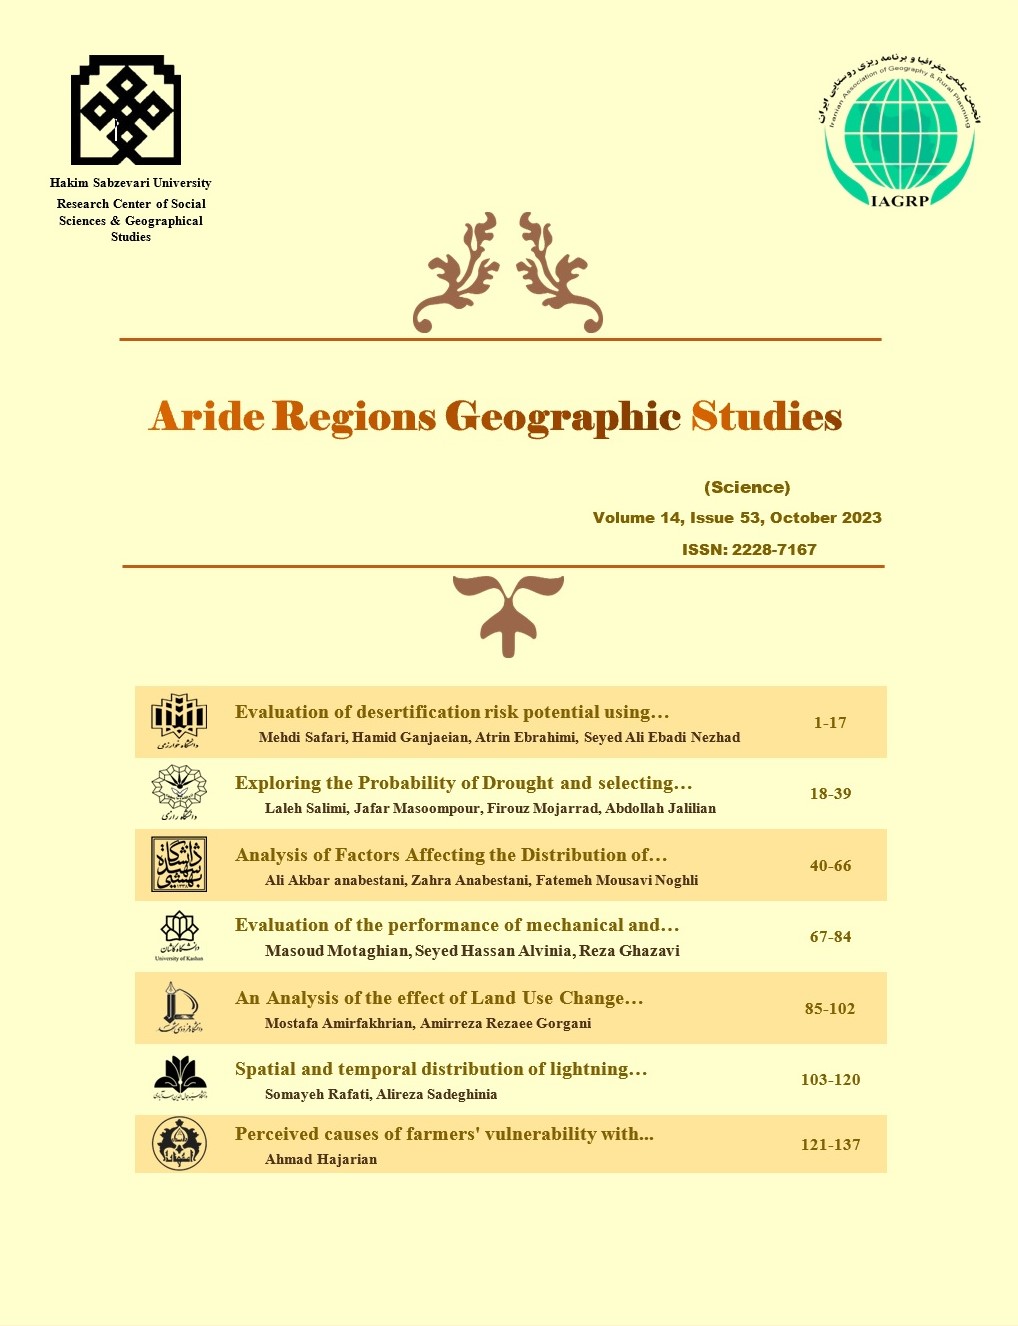 Journal of Arid Regions Geographic Studies